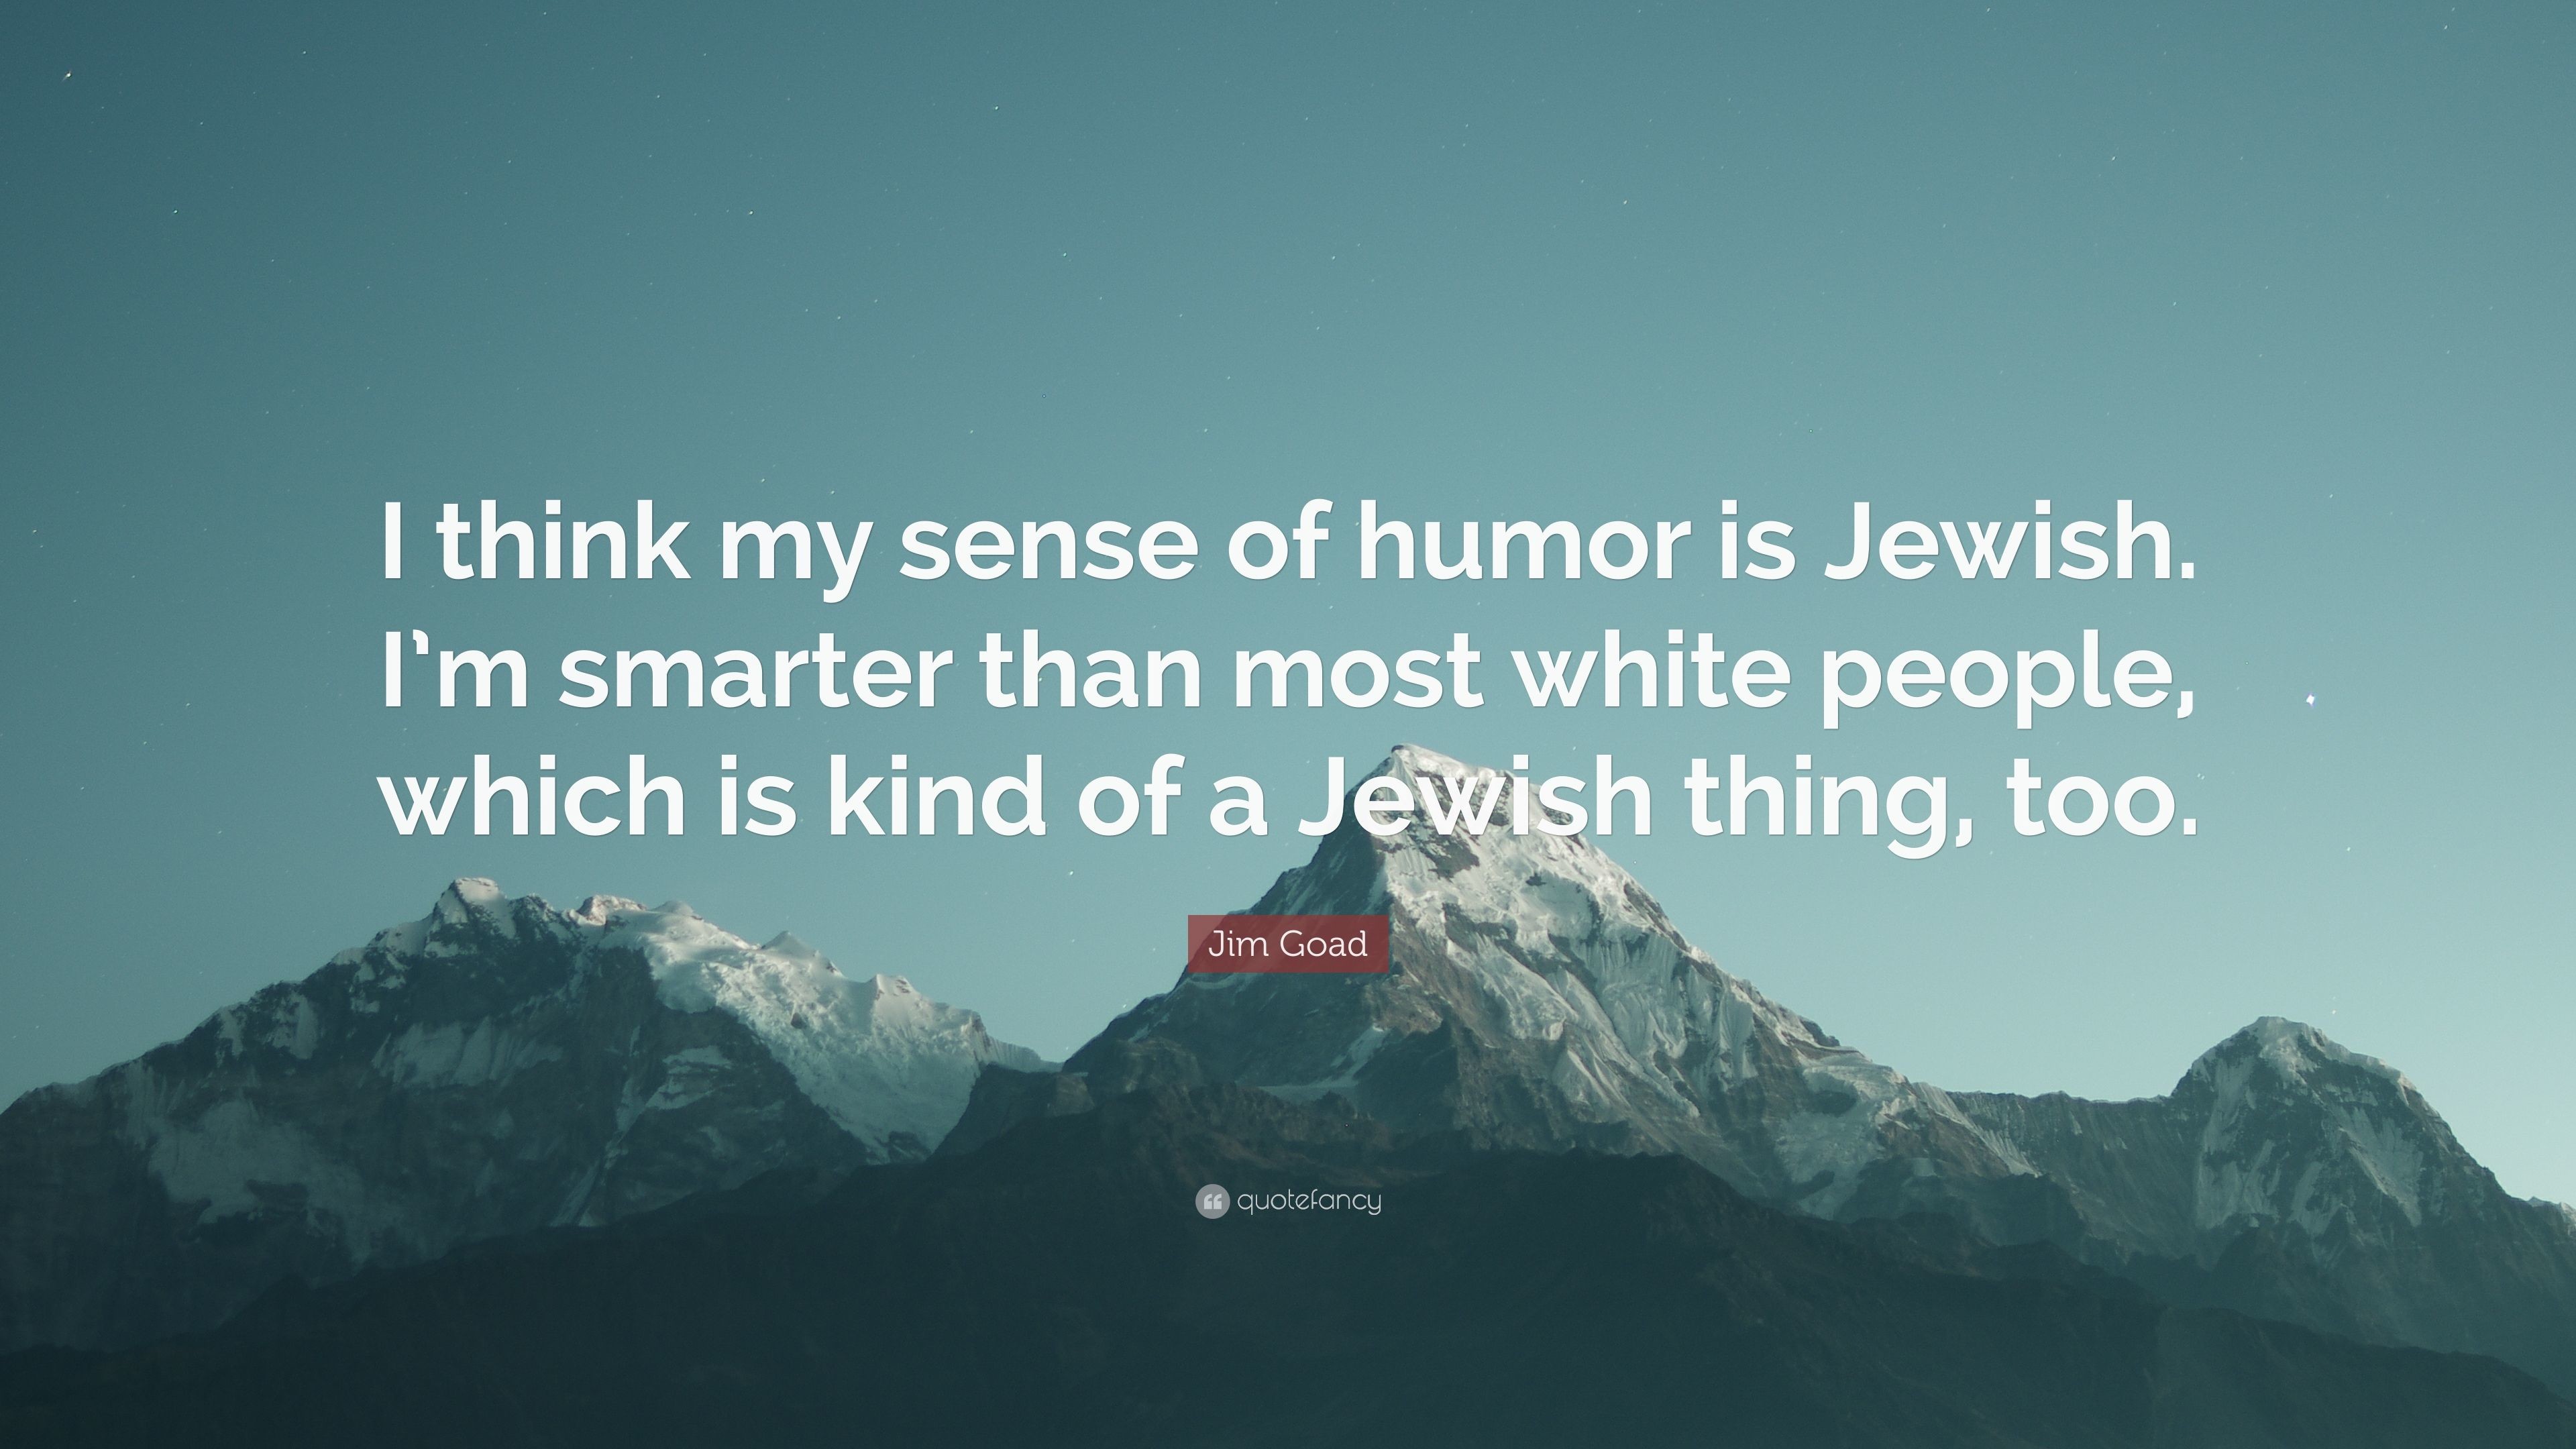 3840x2160 Jim Goad Quote: “I think my sense of humor is Jewish. I'